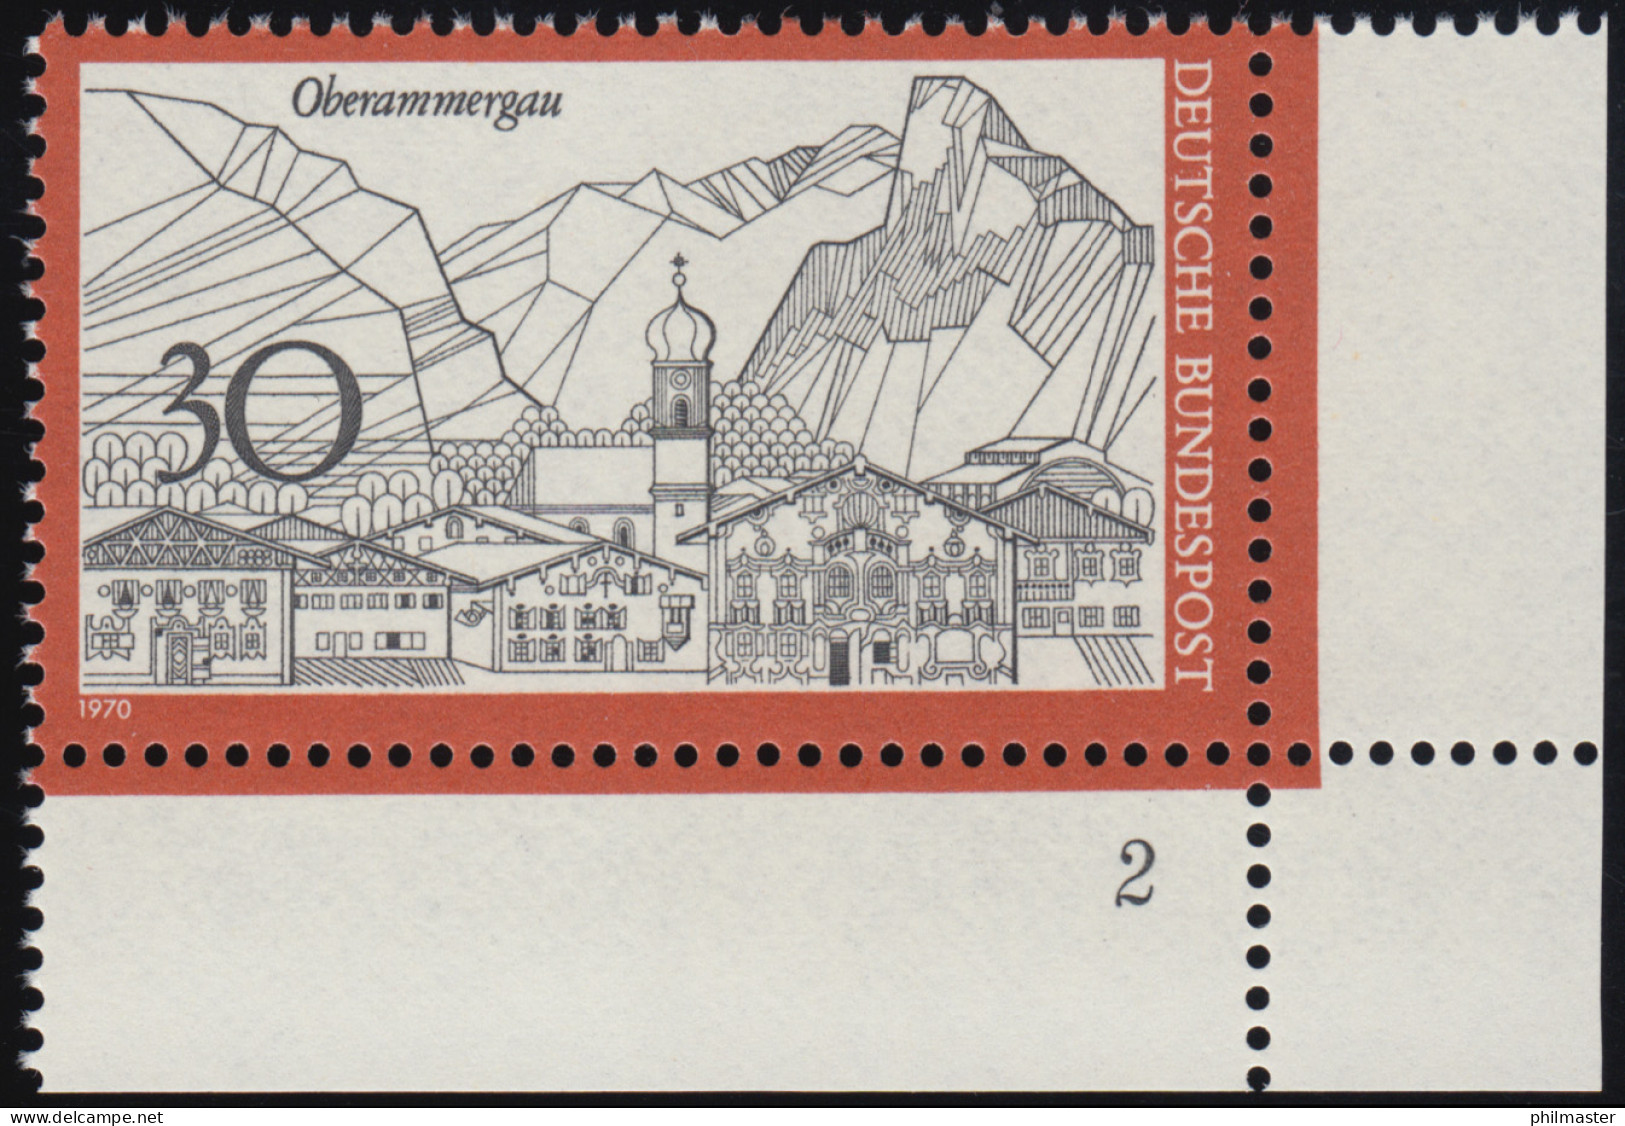 622 Fremdenverkehr Oberammergau ** FN2 - Unused Stamps